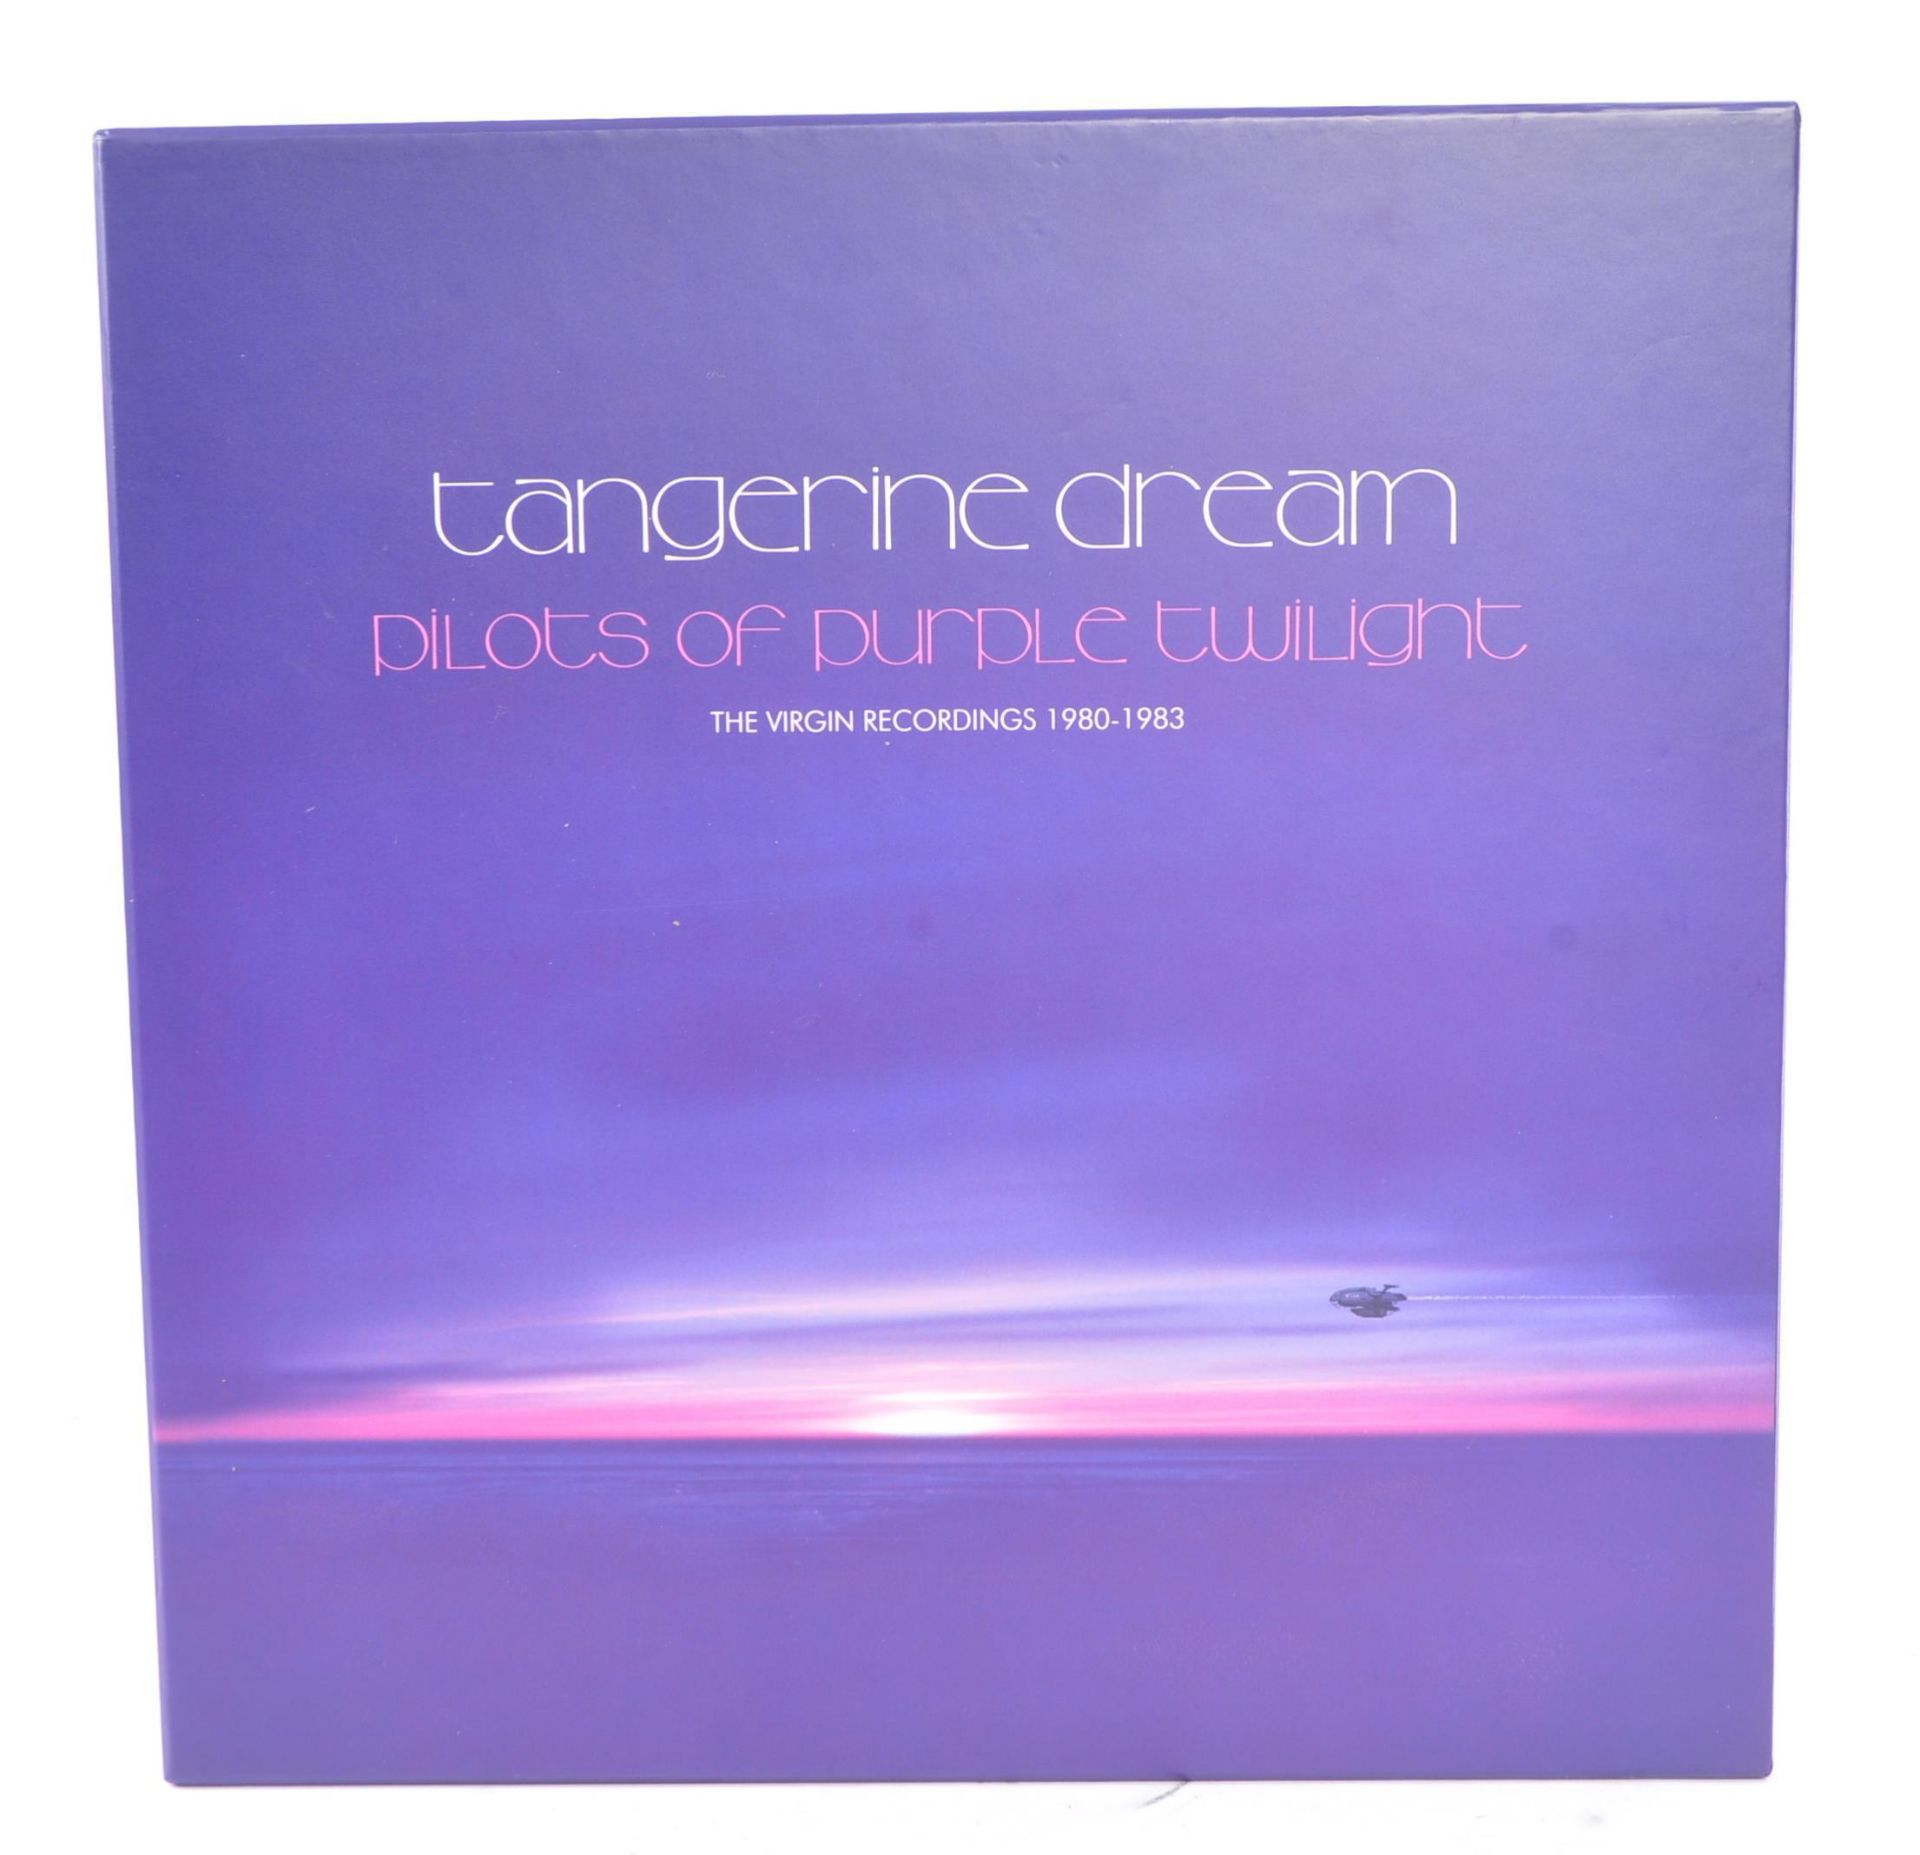 TANGERINE DREAM PILOTS OF THE PURPLE TWILIGHT 10 CD ALBUMs